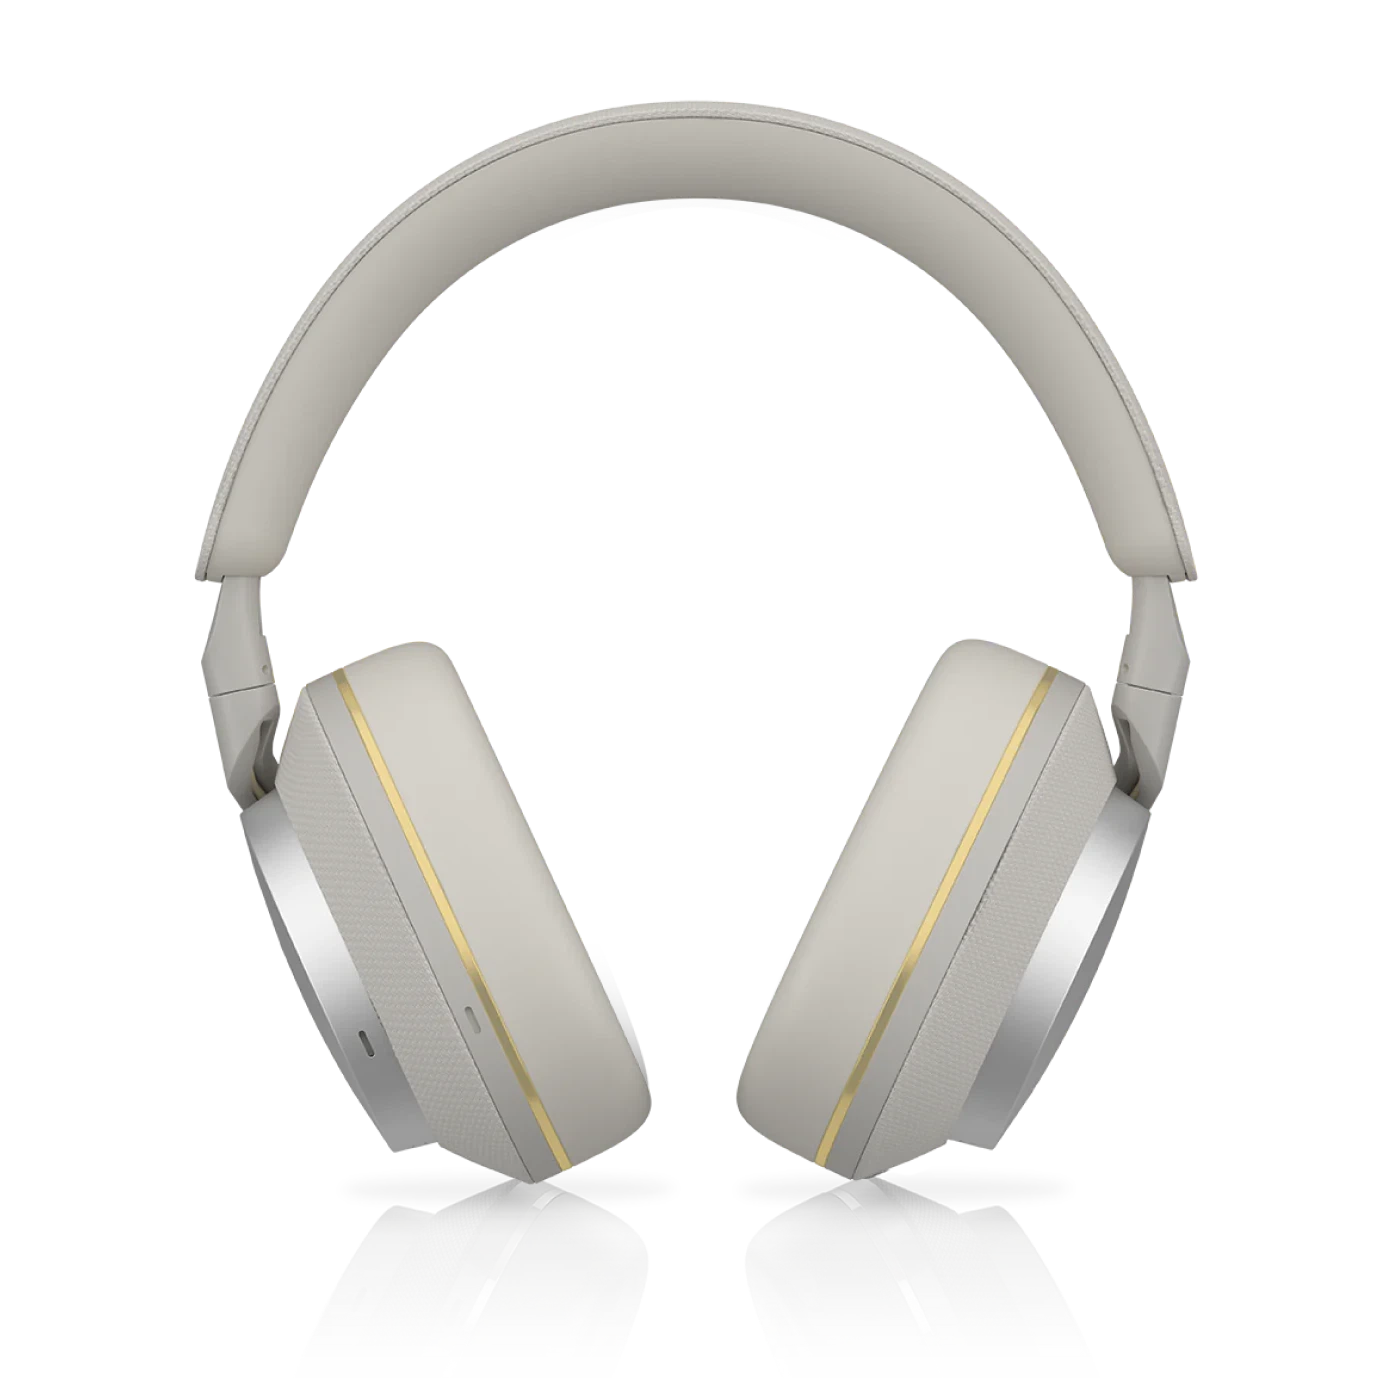 Bowers & Wilkins - Px7 S2e - Over-Ear Noise Canceling Headphones Australia